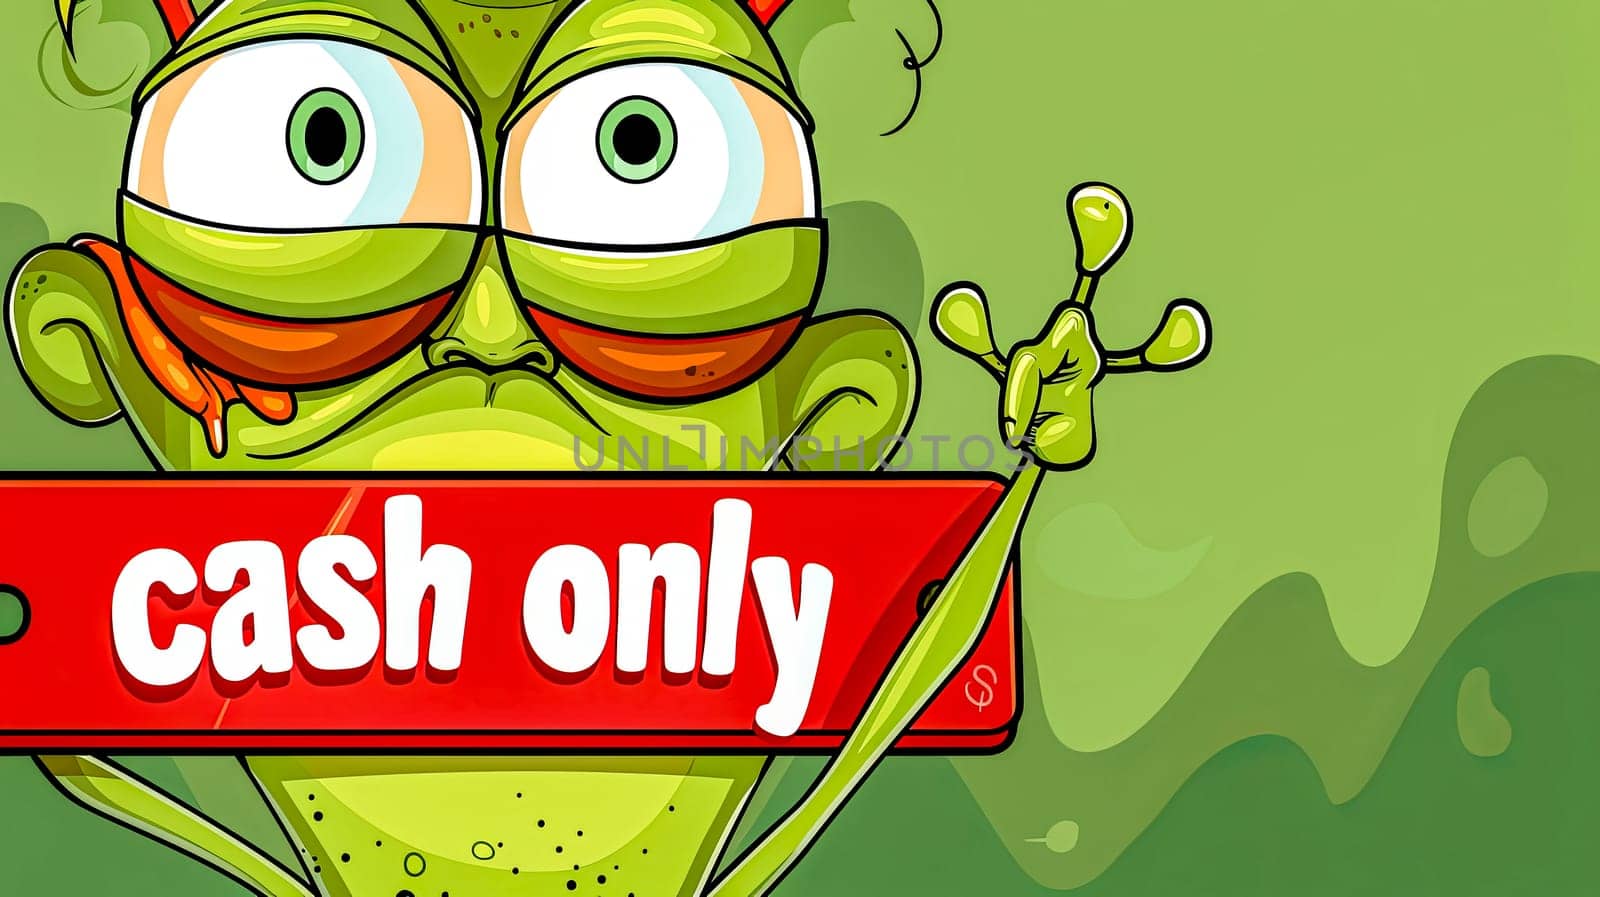 Cartoon frog holding 'cash only' sign illustration by Edophoto